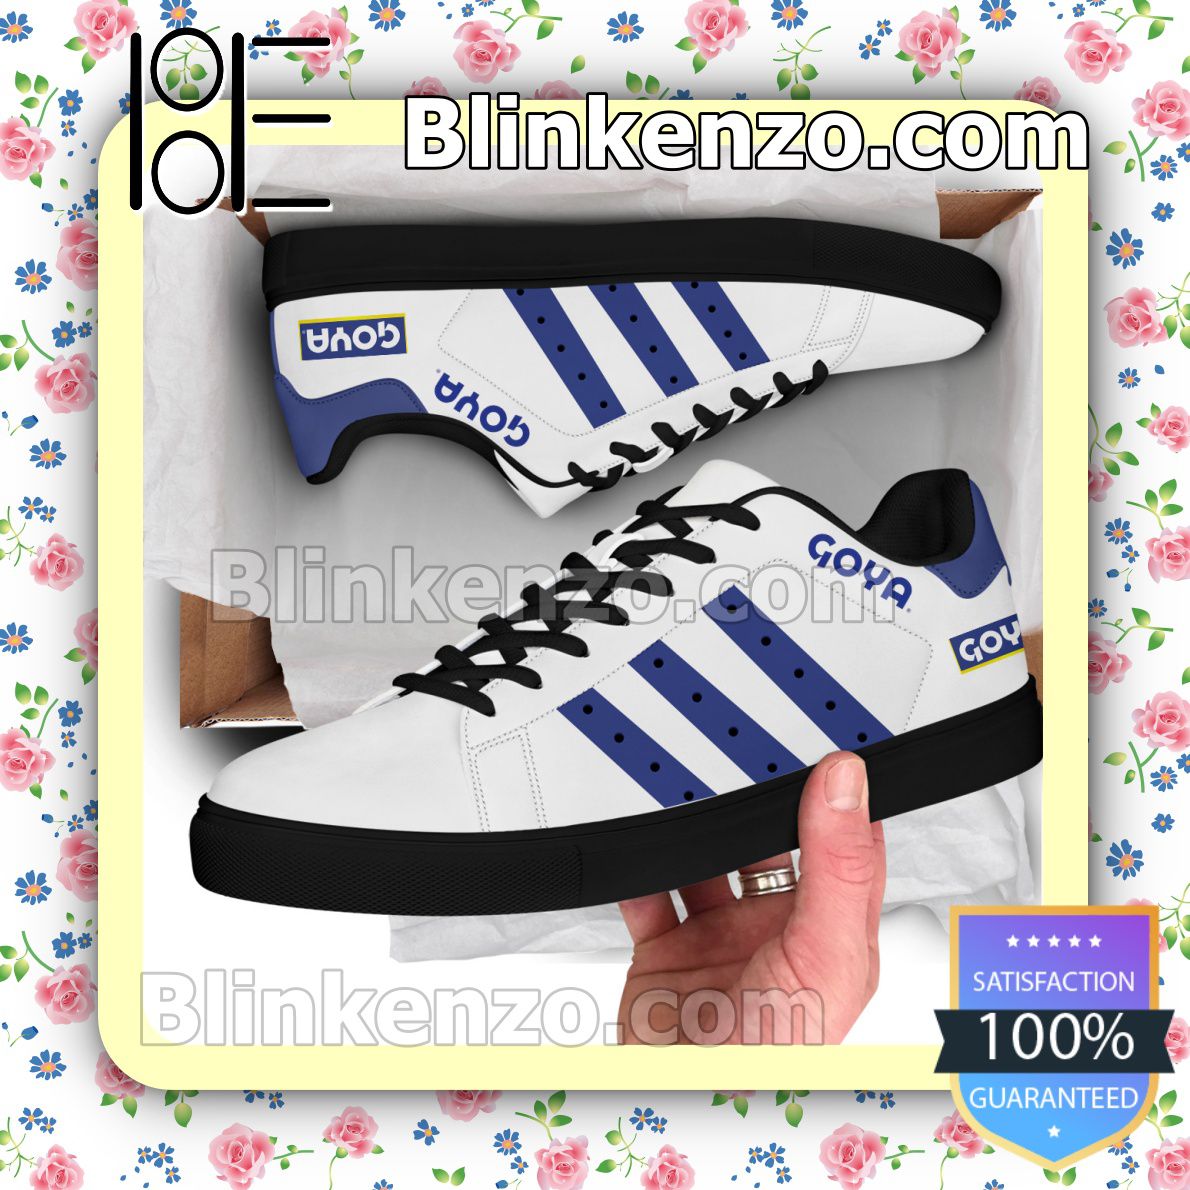 Goya Brand Adidas Low Top Shoes - Blinkenzo